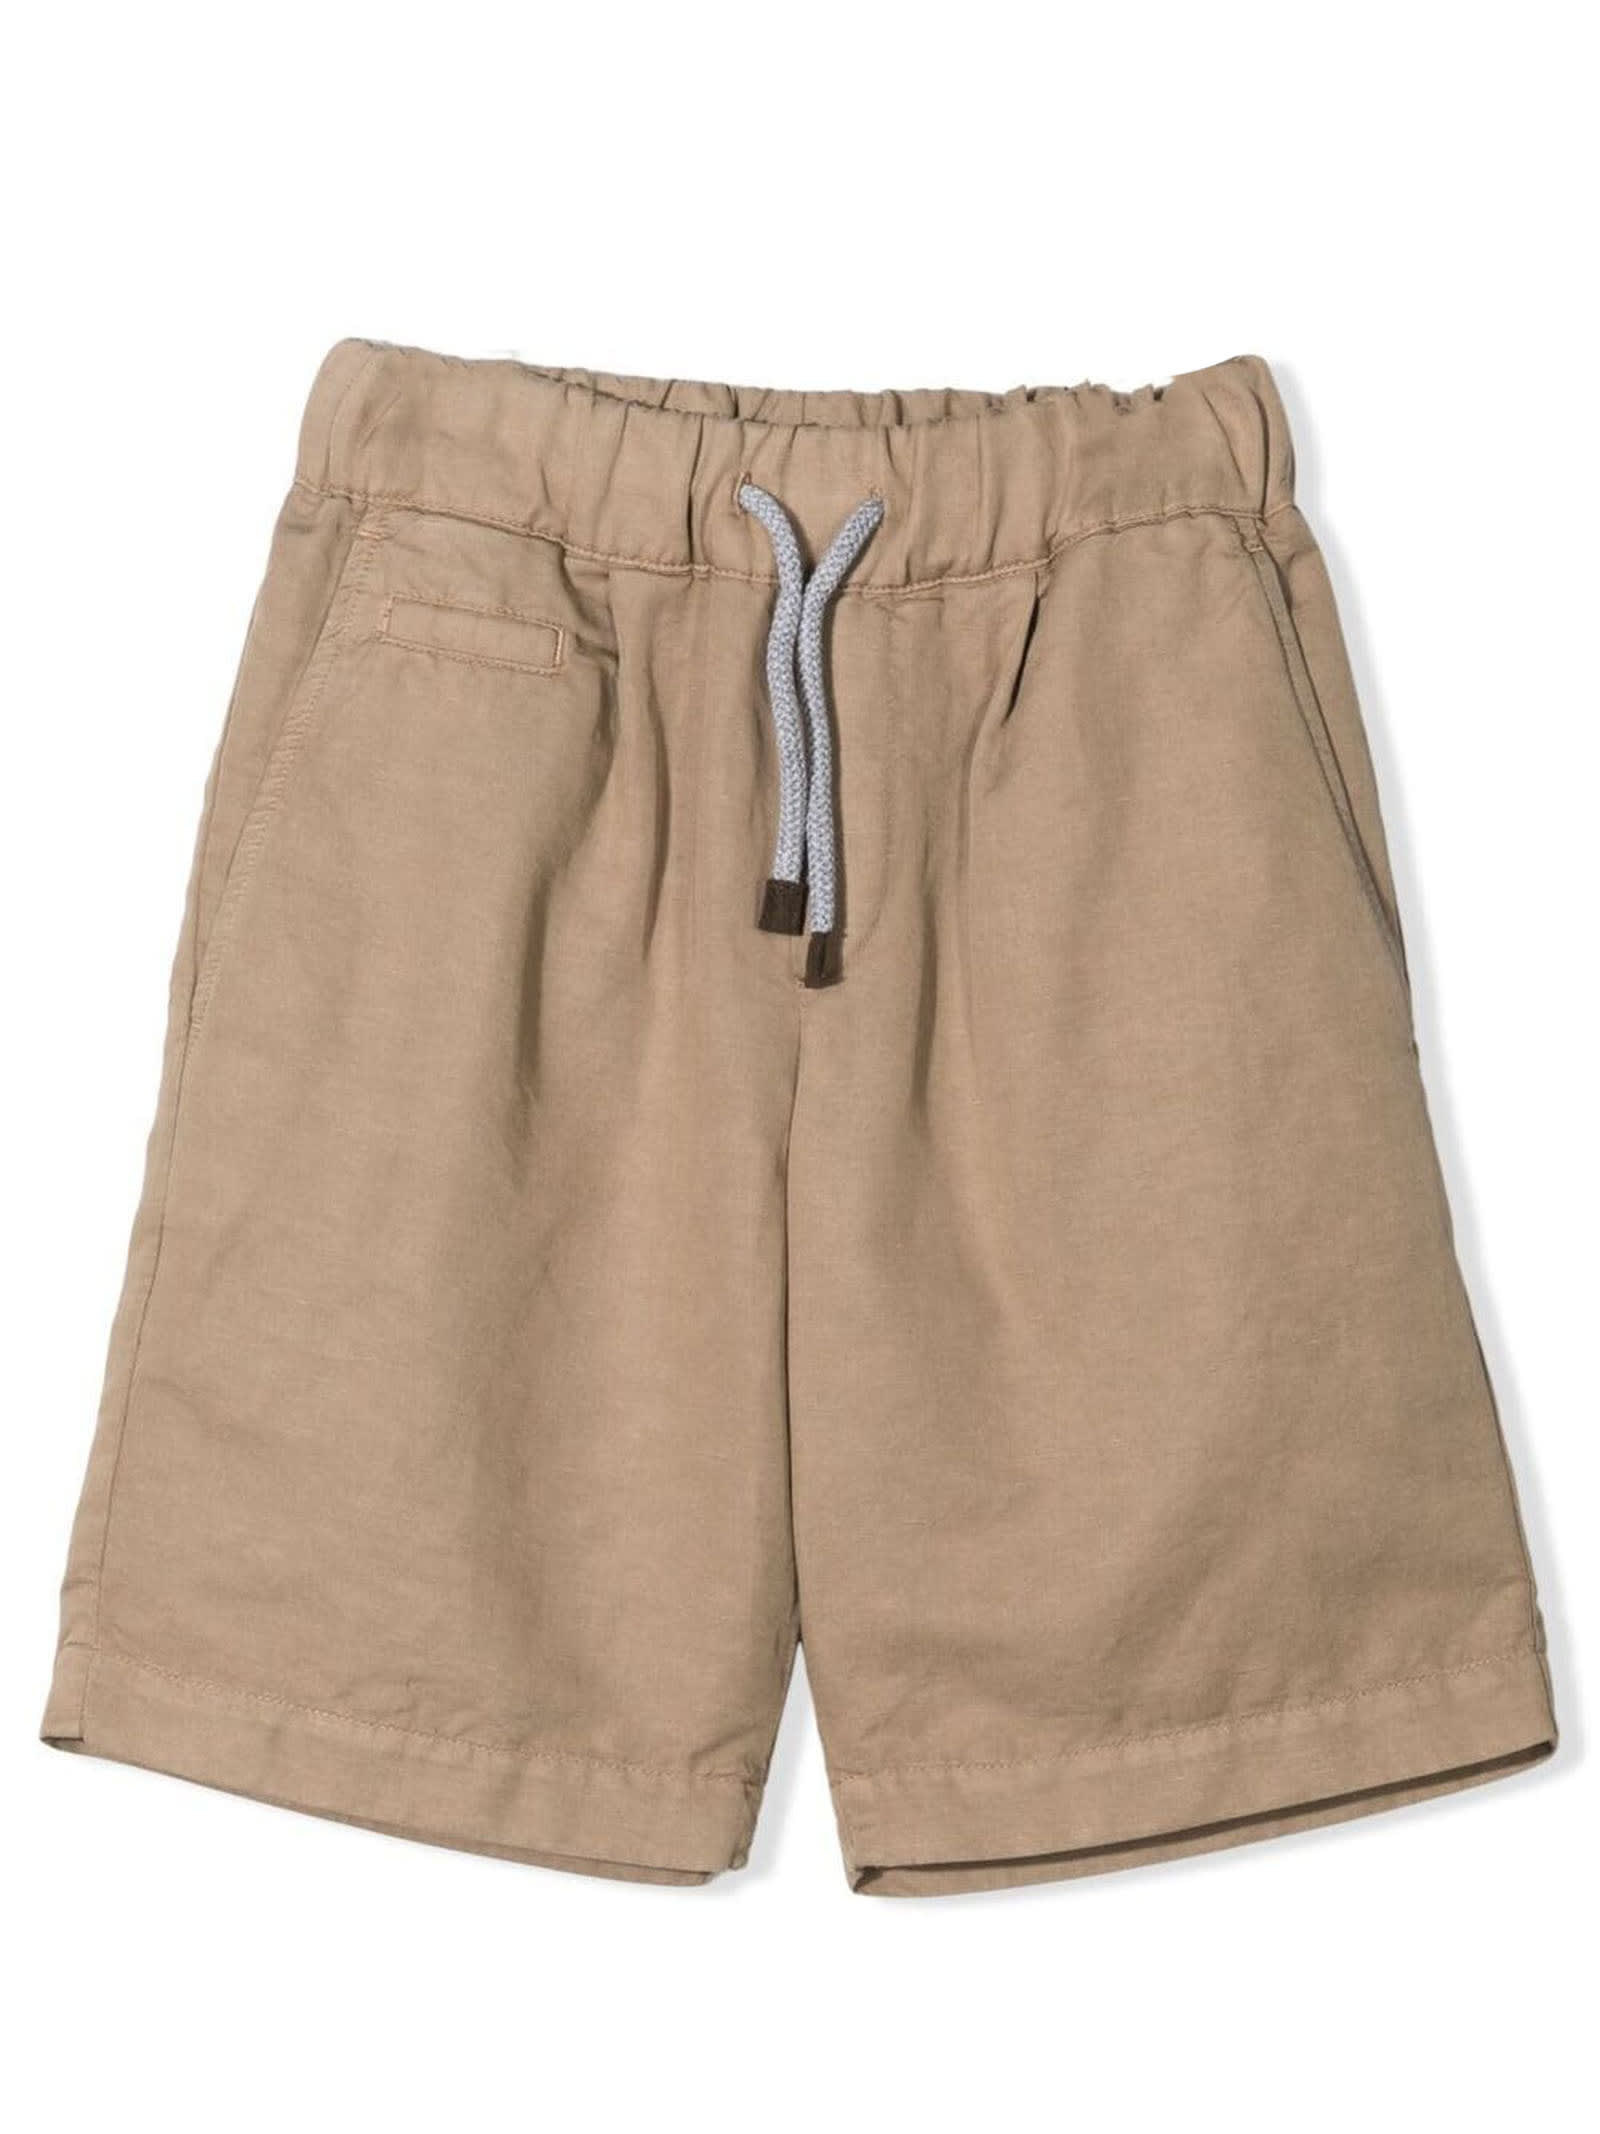 Brunello Cucinelli Brown Cotton And Linen Shorts